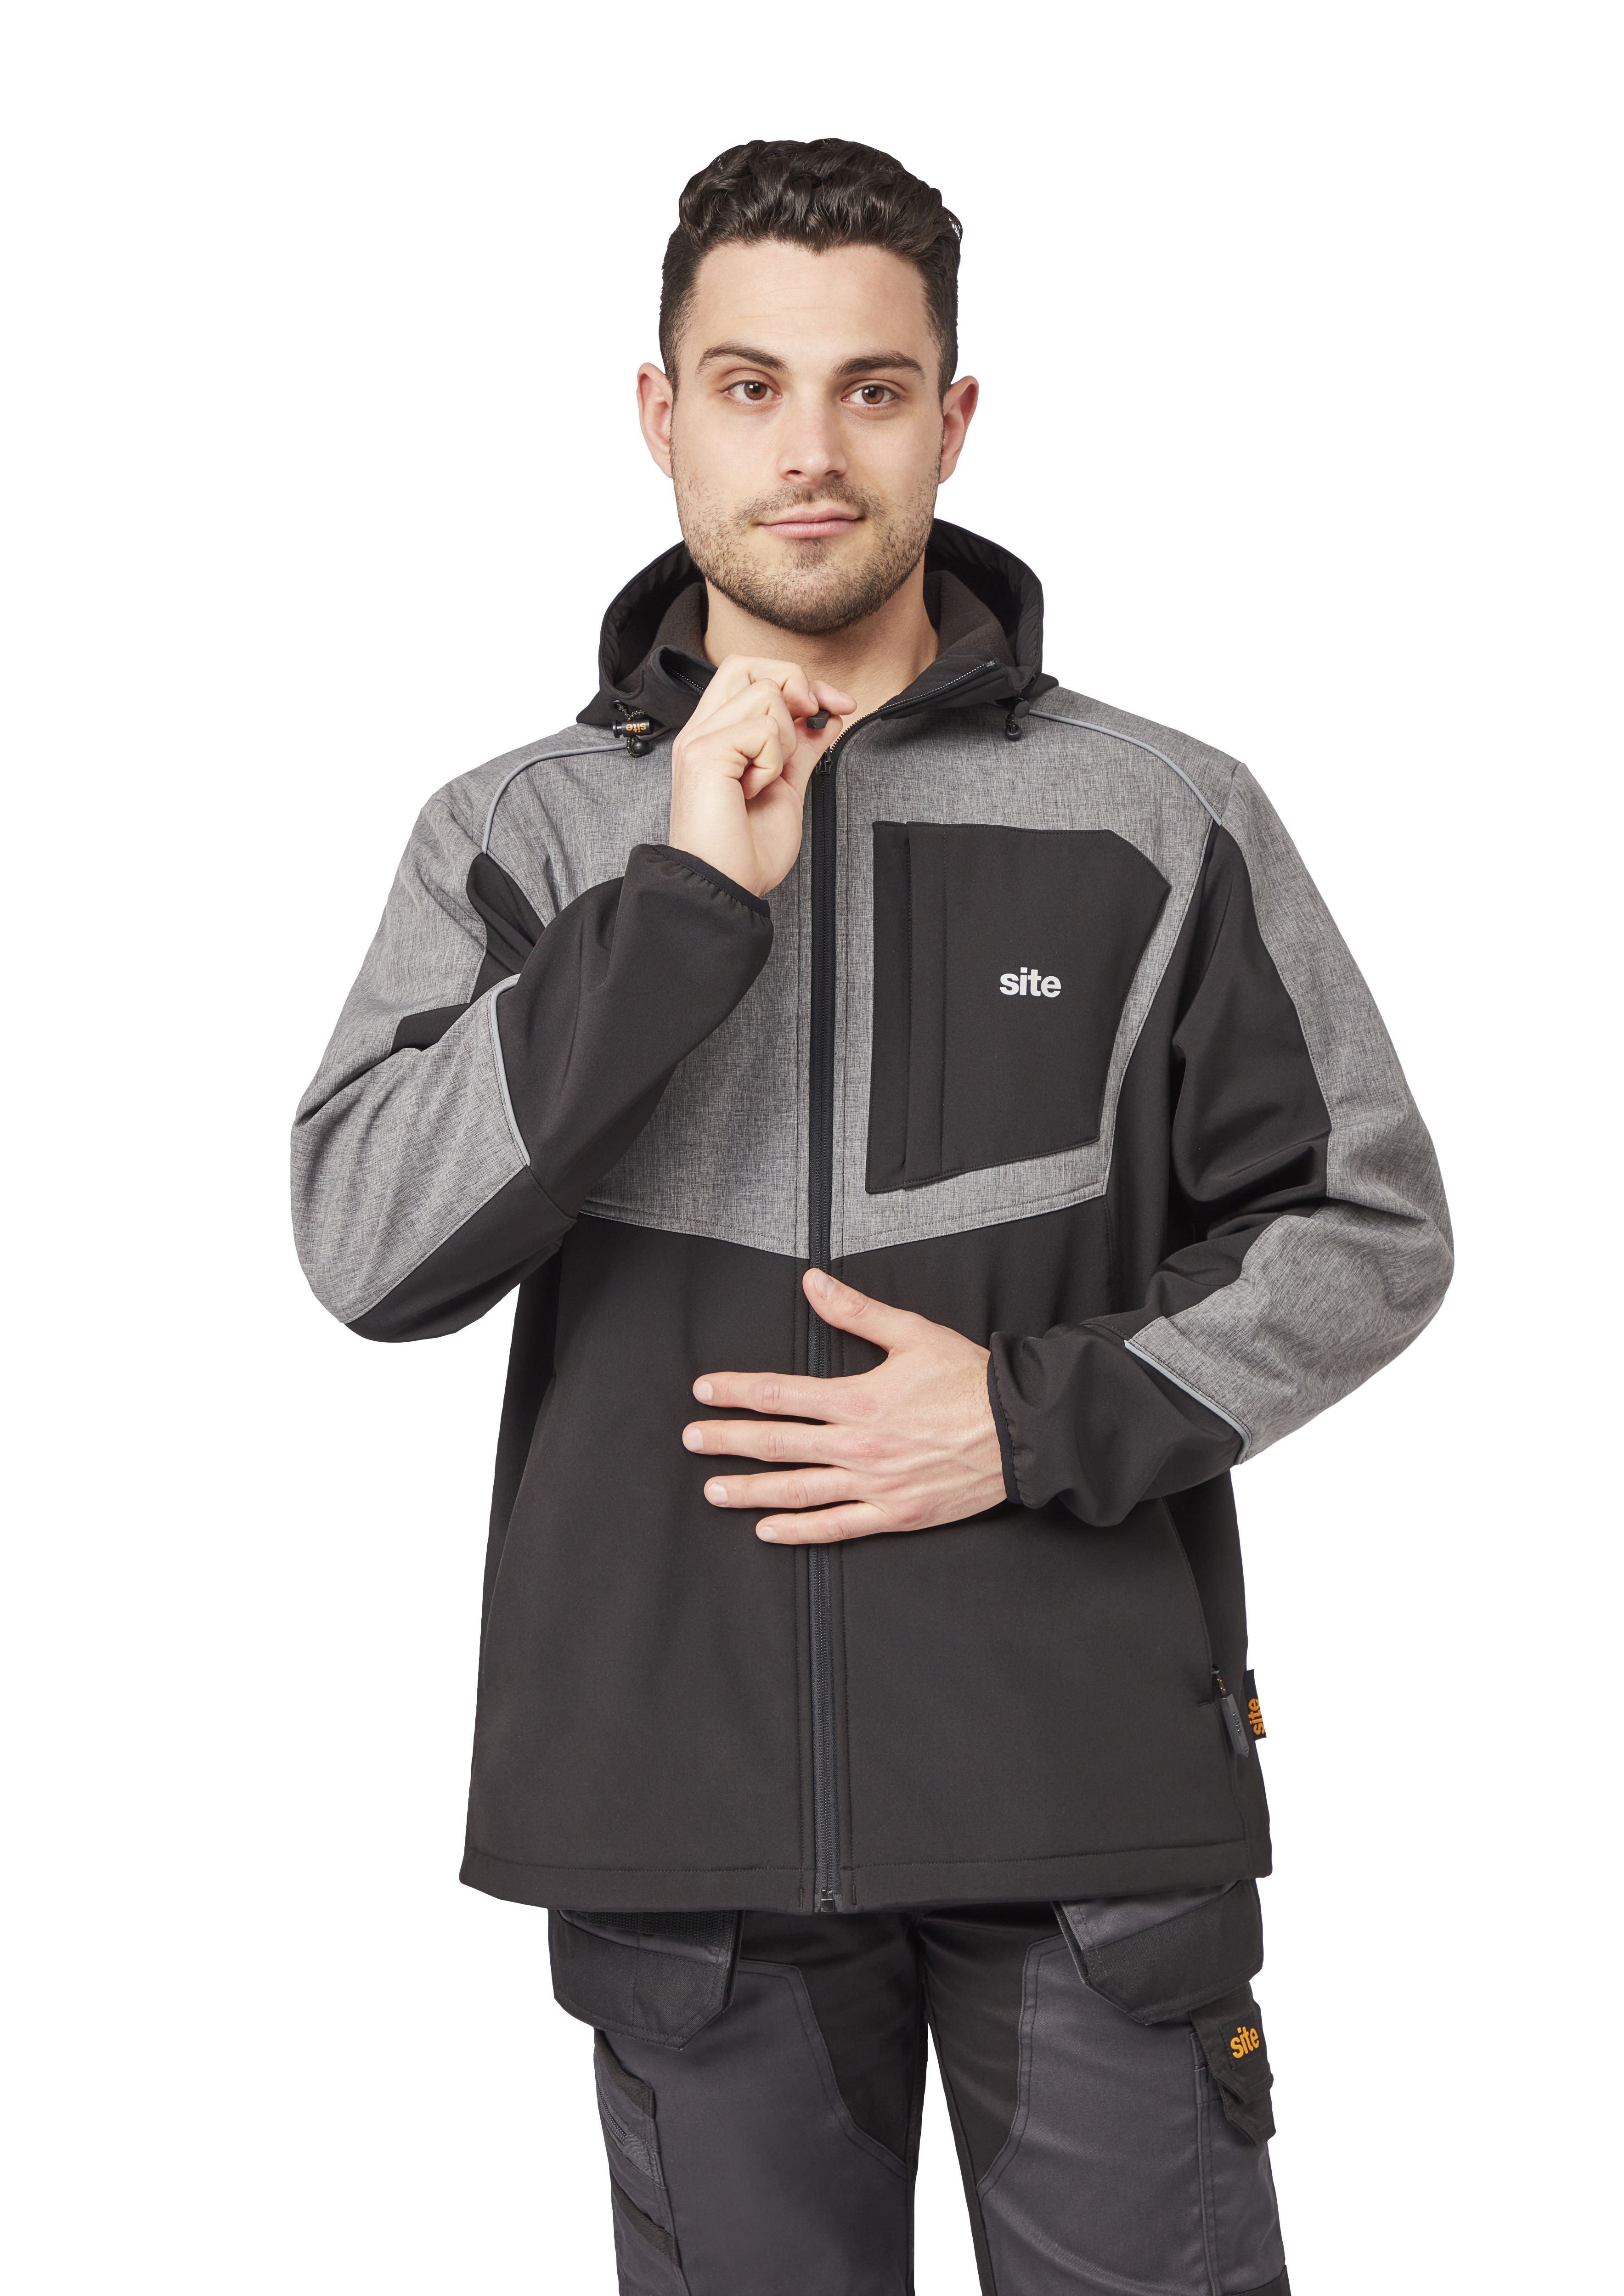 Site Cladwel Black & grey Men's Softshell jacket, X Large